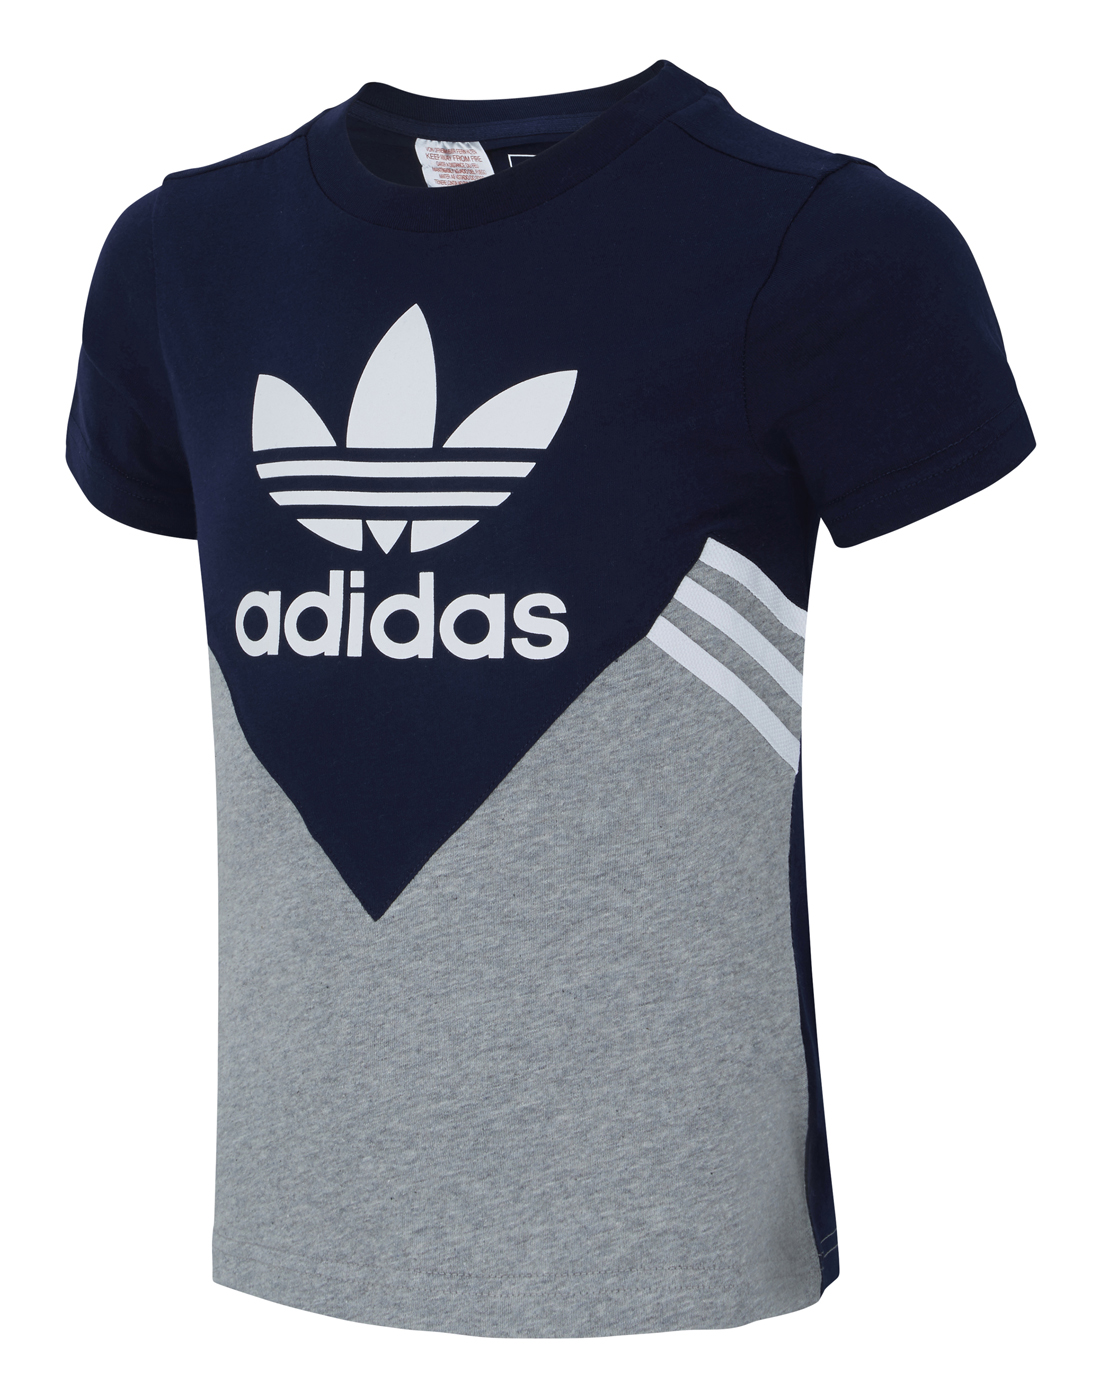 Адидас футболка 44. Adidas t Shirt 2004. Adidas Originals футболка мужская 2023. Adidas Originals t Shirt. Футболка адидас ориджинал мужская.